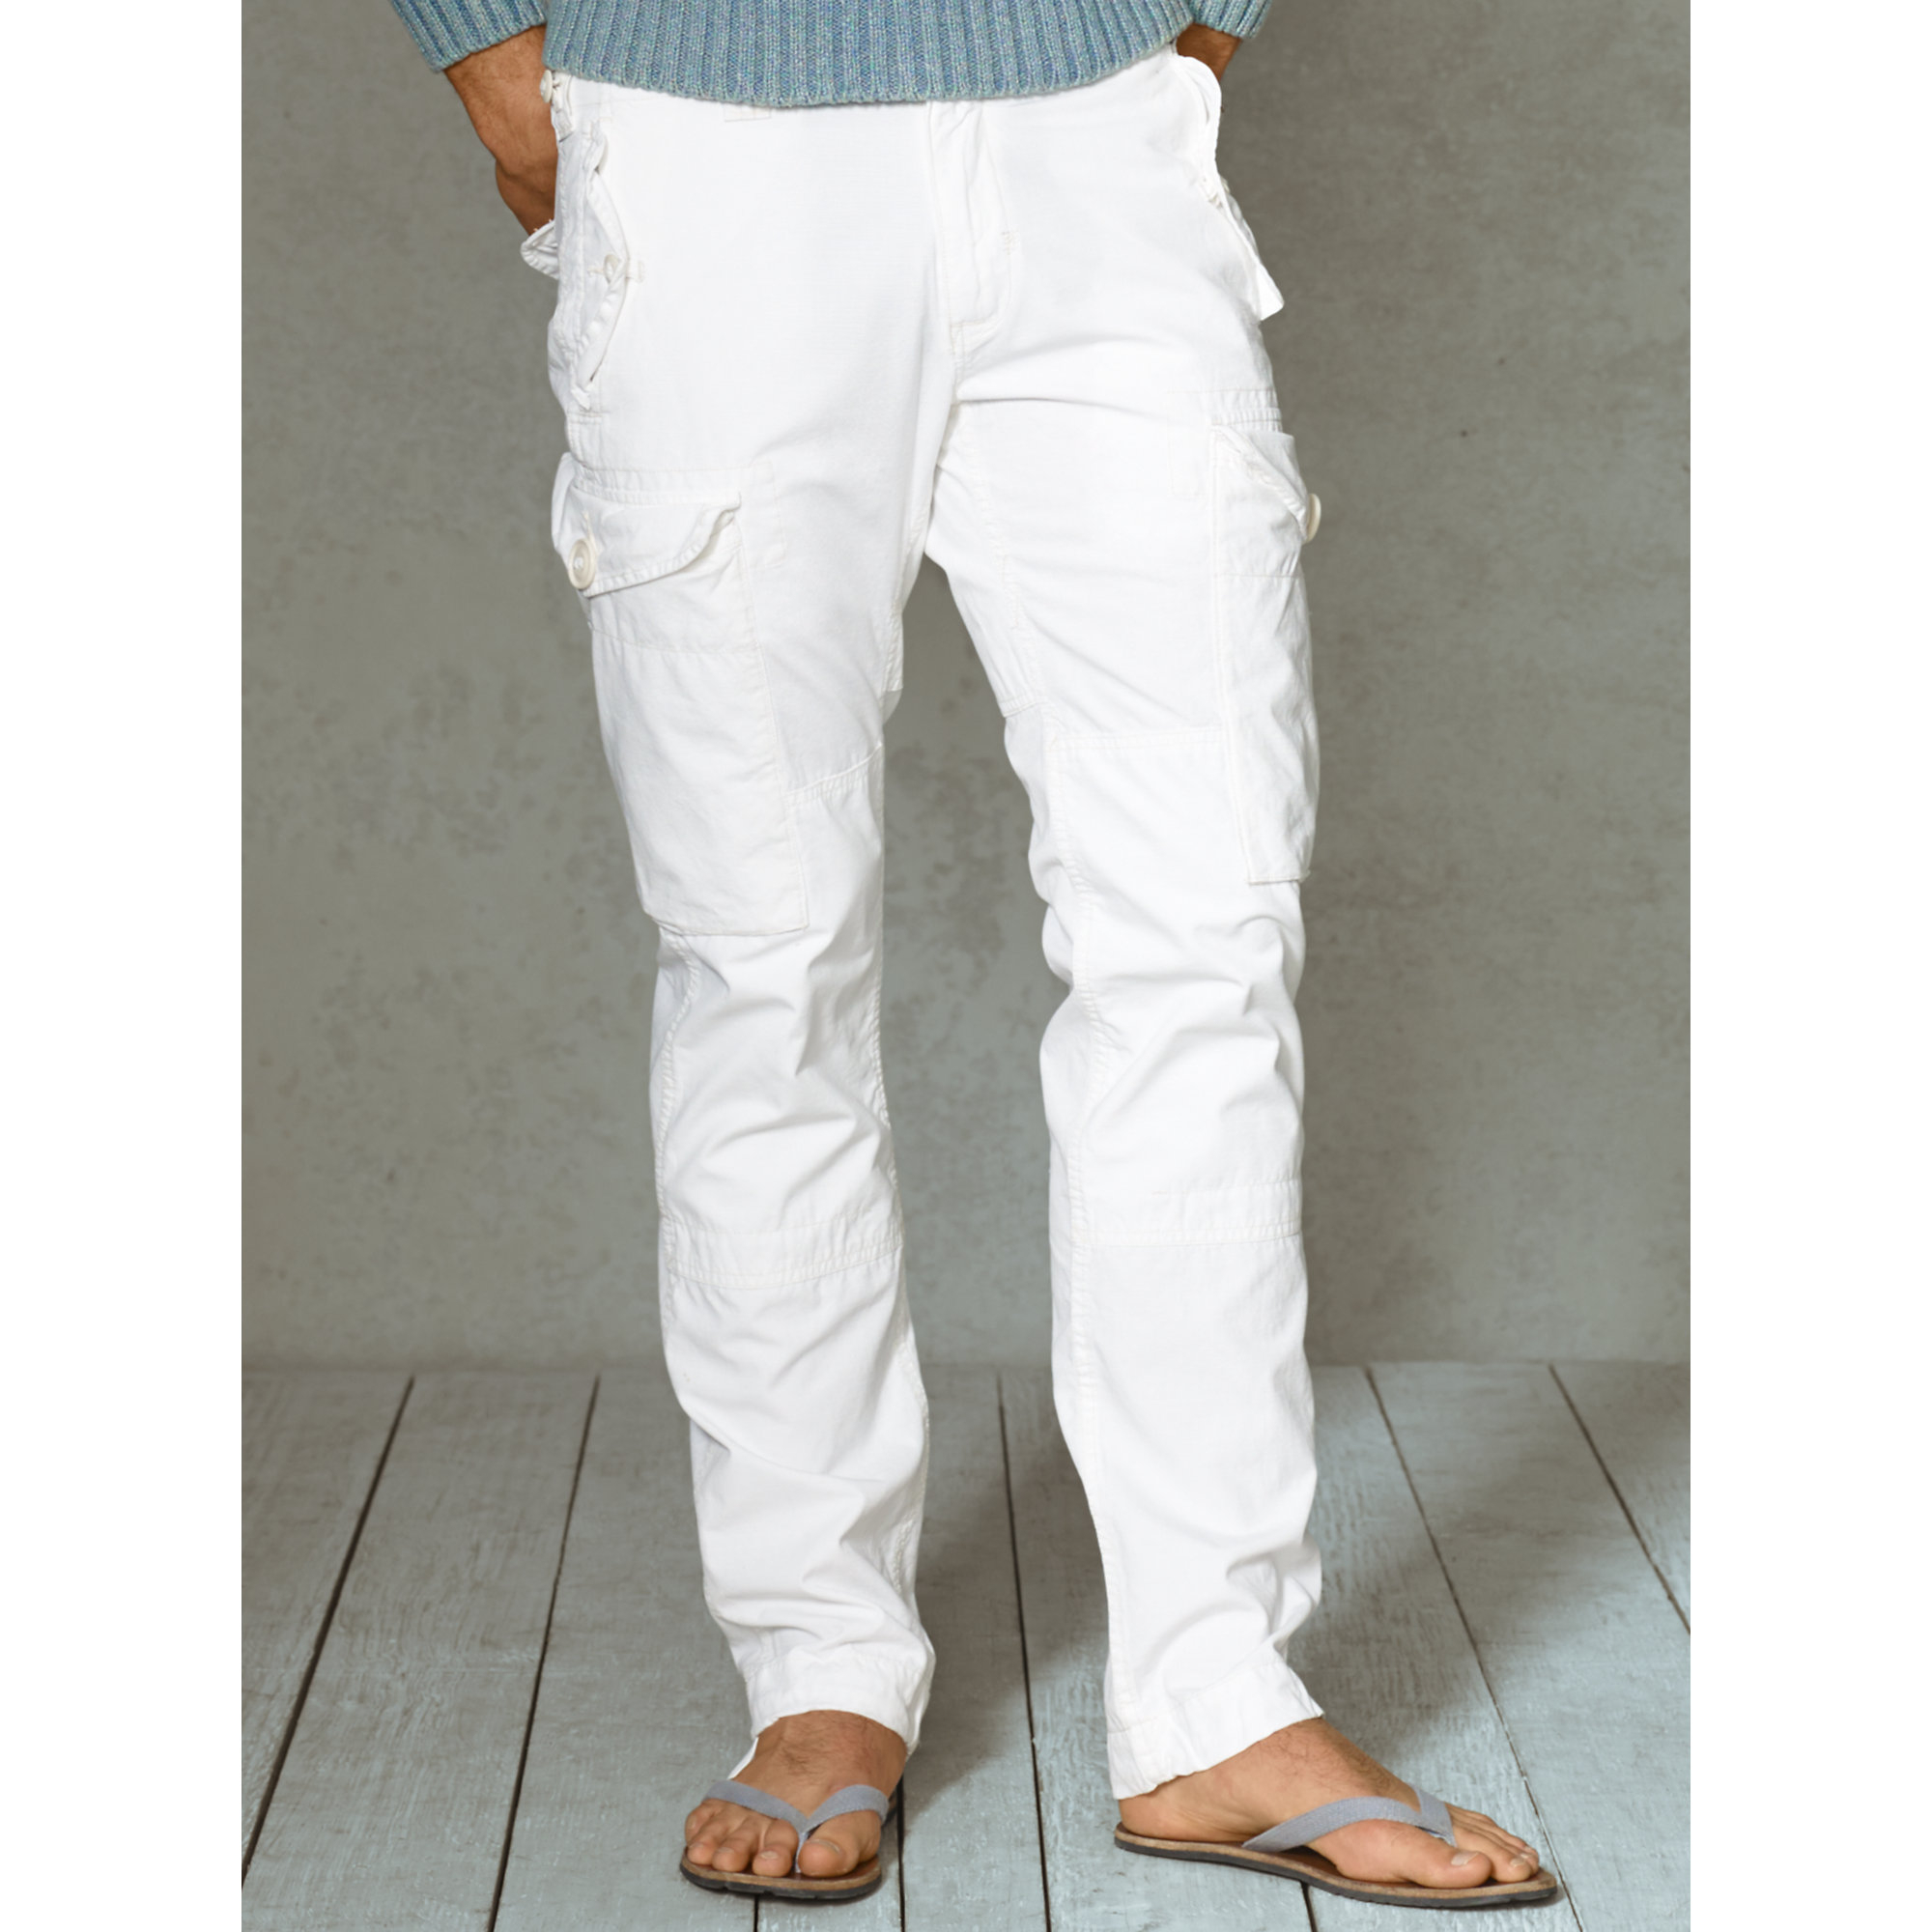 ralph lauren white pants